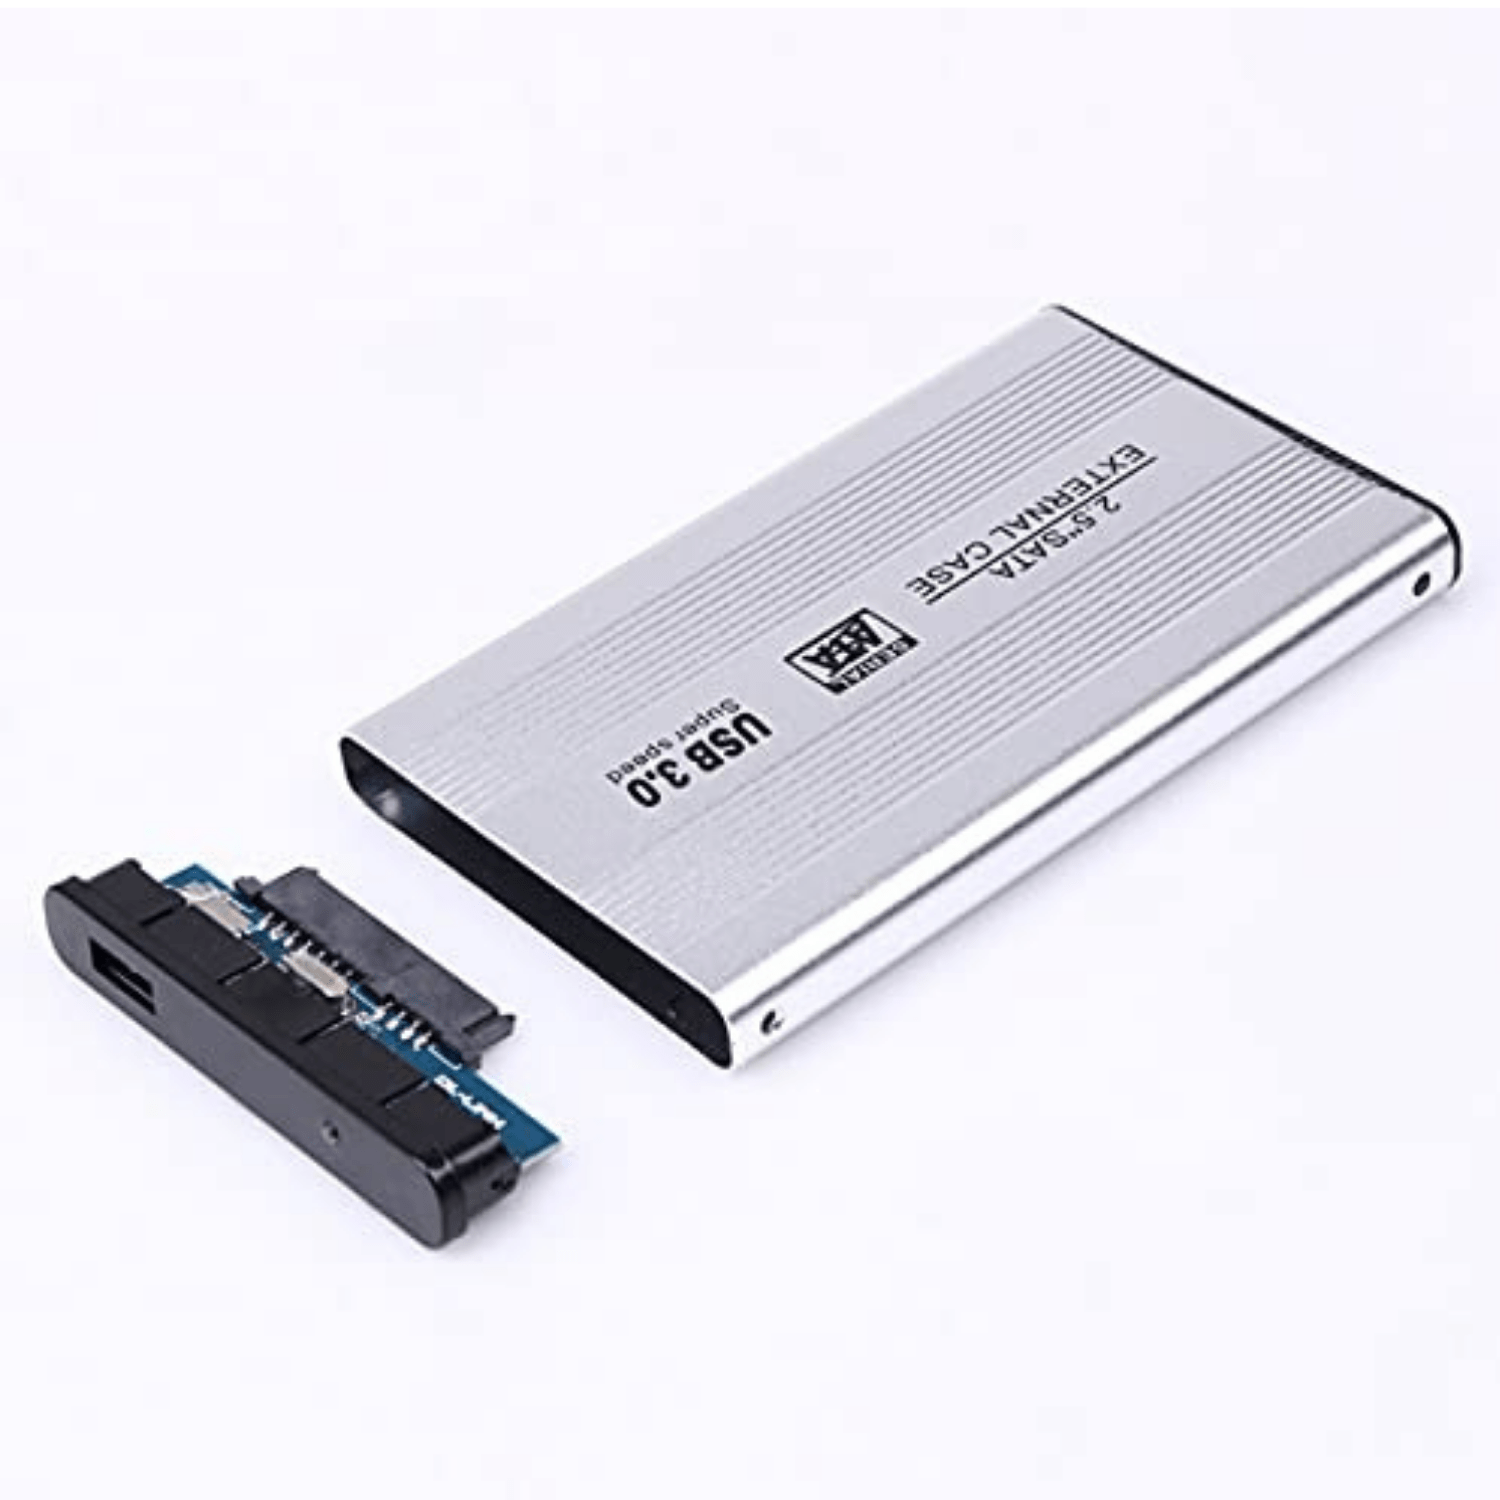 Exeller 2.5 SATA Laptop External Hard Drive Case - USB 3.0 Silver